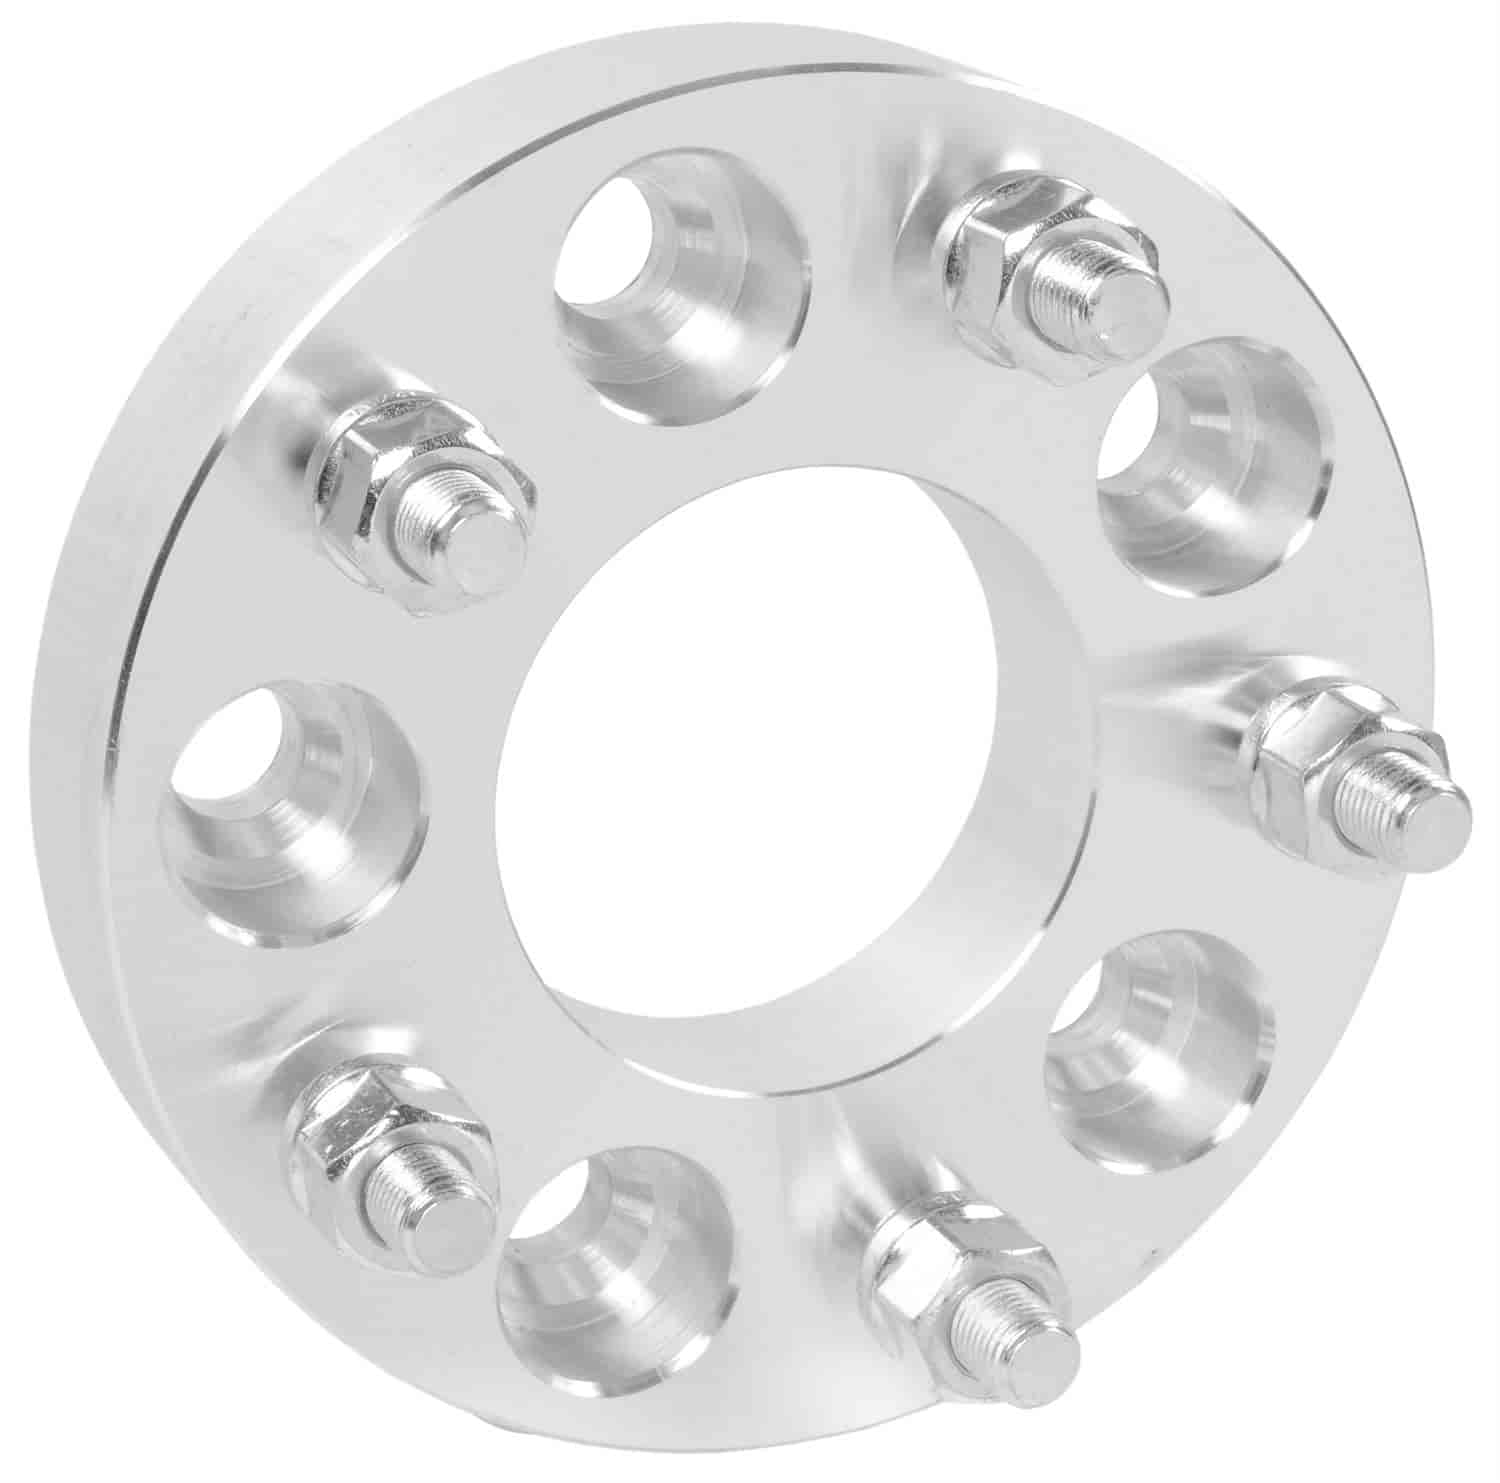 Billet Aluminum Wheel Adapter [Adapts 5 x 4.75